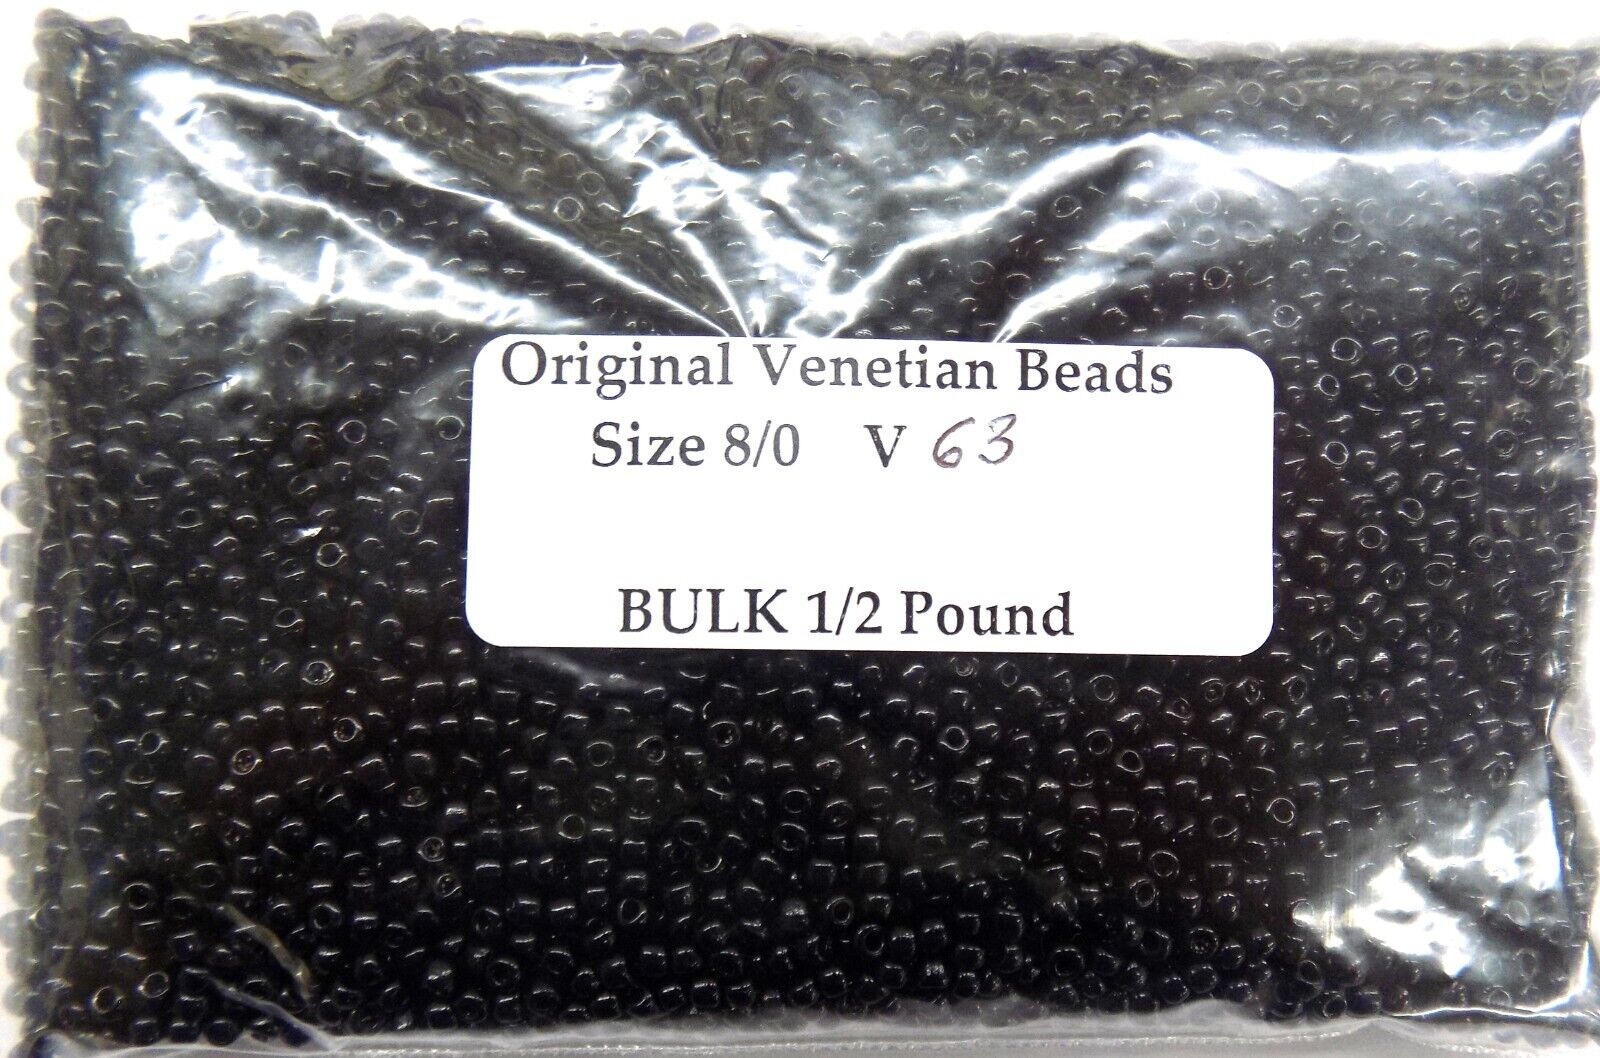 1/2# Pound Bulk 8/0 Midnight Blue Original Venetian Seed Beads African Trade V63